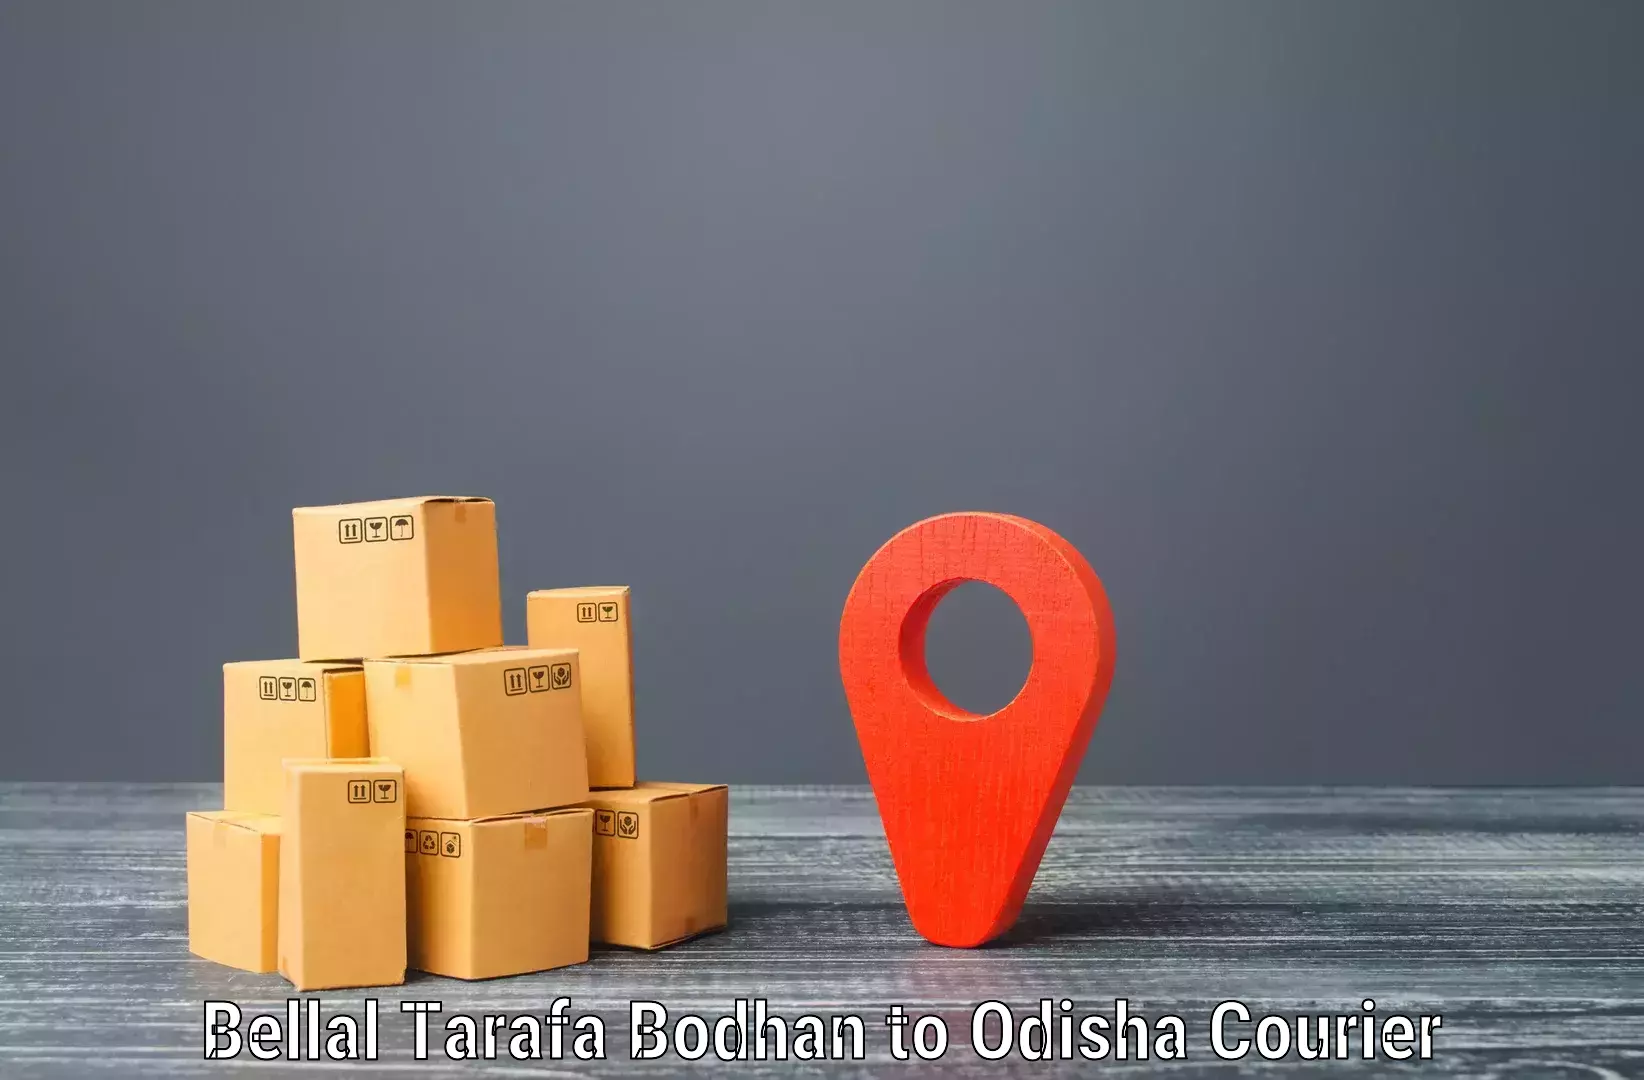 Reliable parcel services Bellal Tarafa Bodhan to Sambalpur